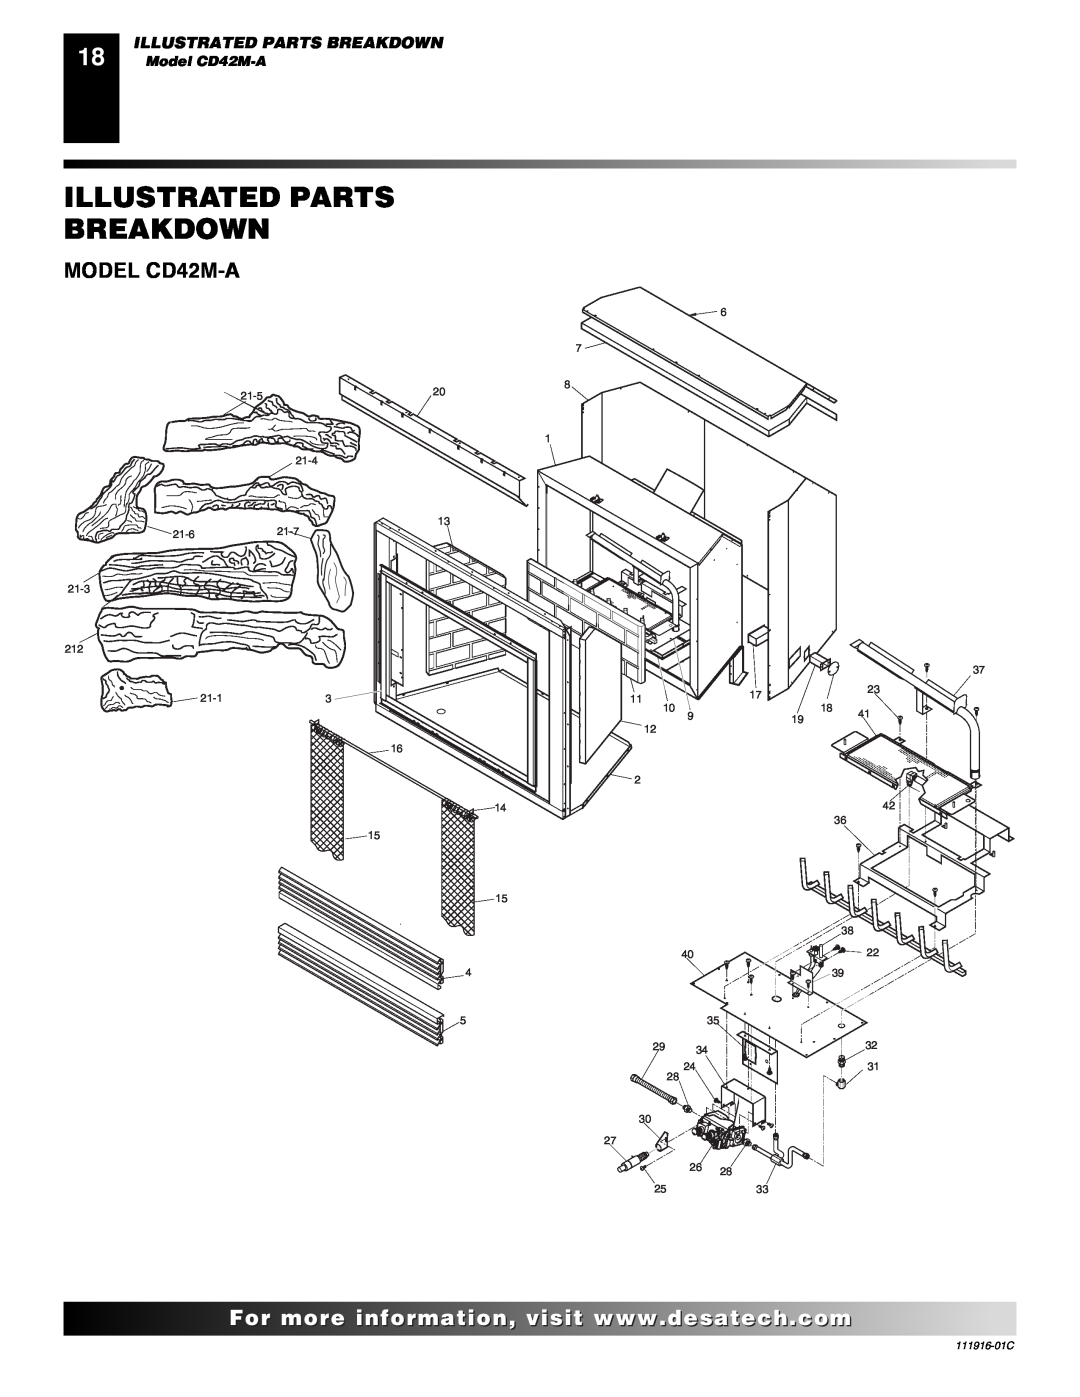 Desa CD32M (-1)(-2) installation manual Illustrated Parts Breakdown, Model CD42M-A, 111916-01C 